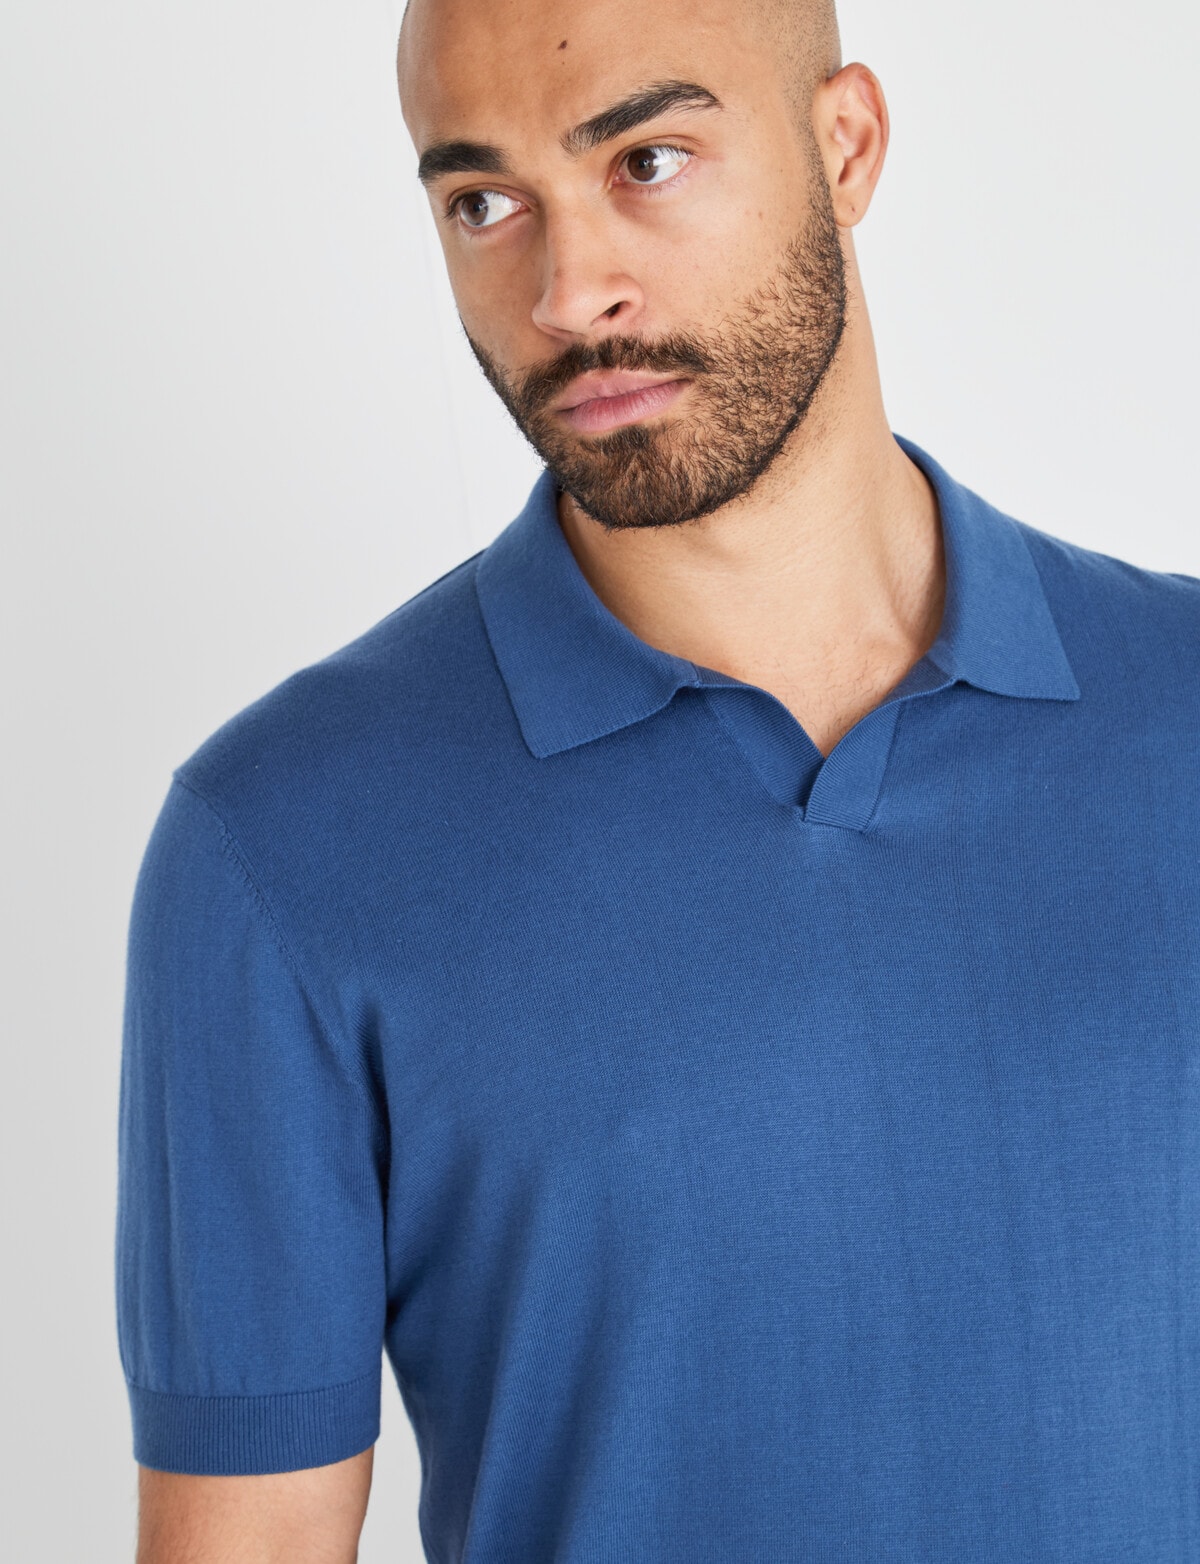 L+L Venice Solid Polo Shirt, Blue - T-shirts, Singlets & Polos